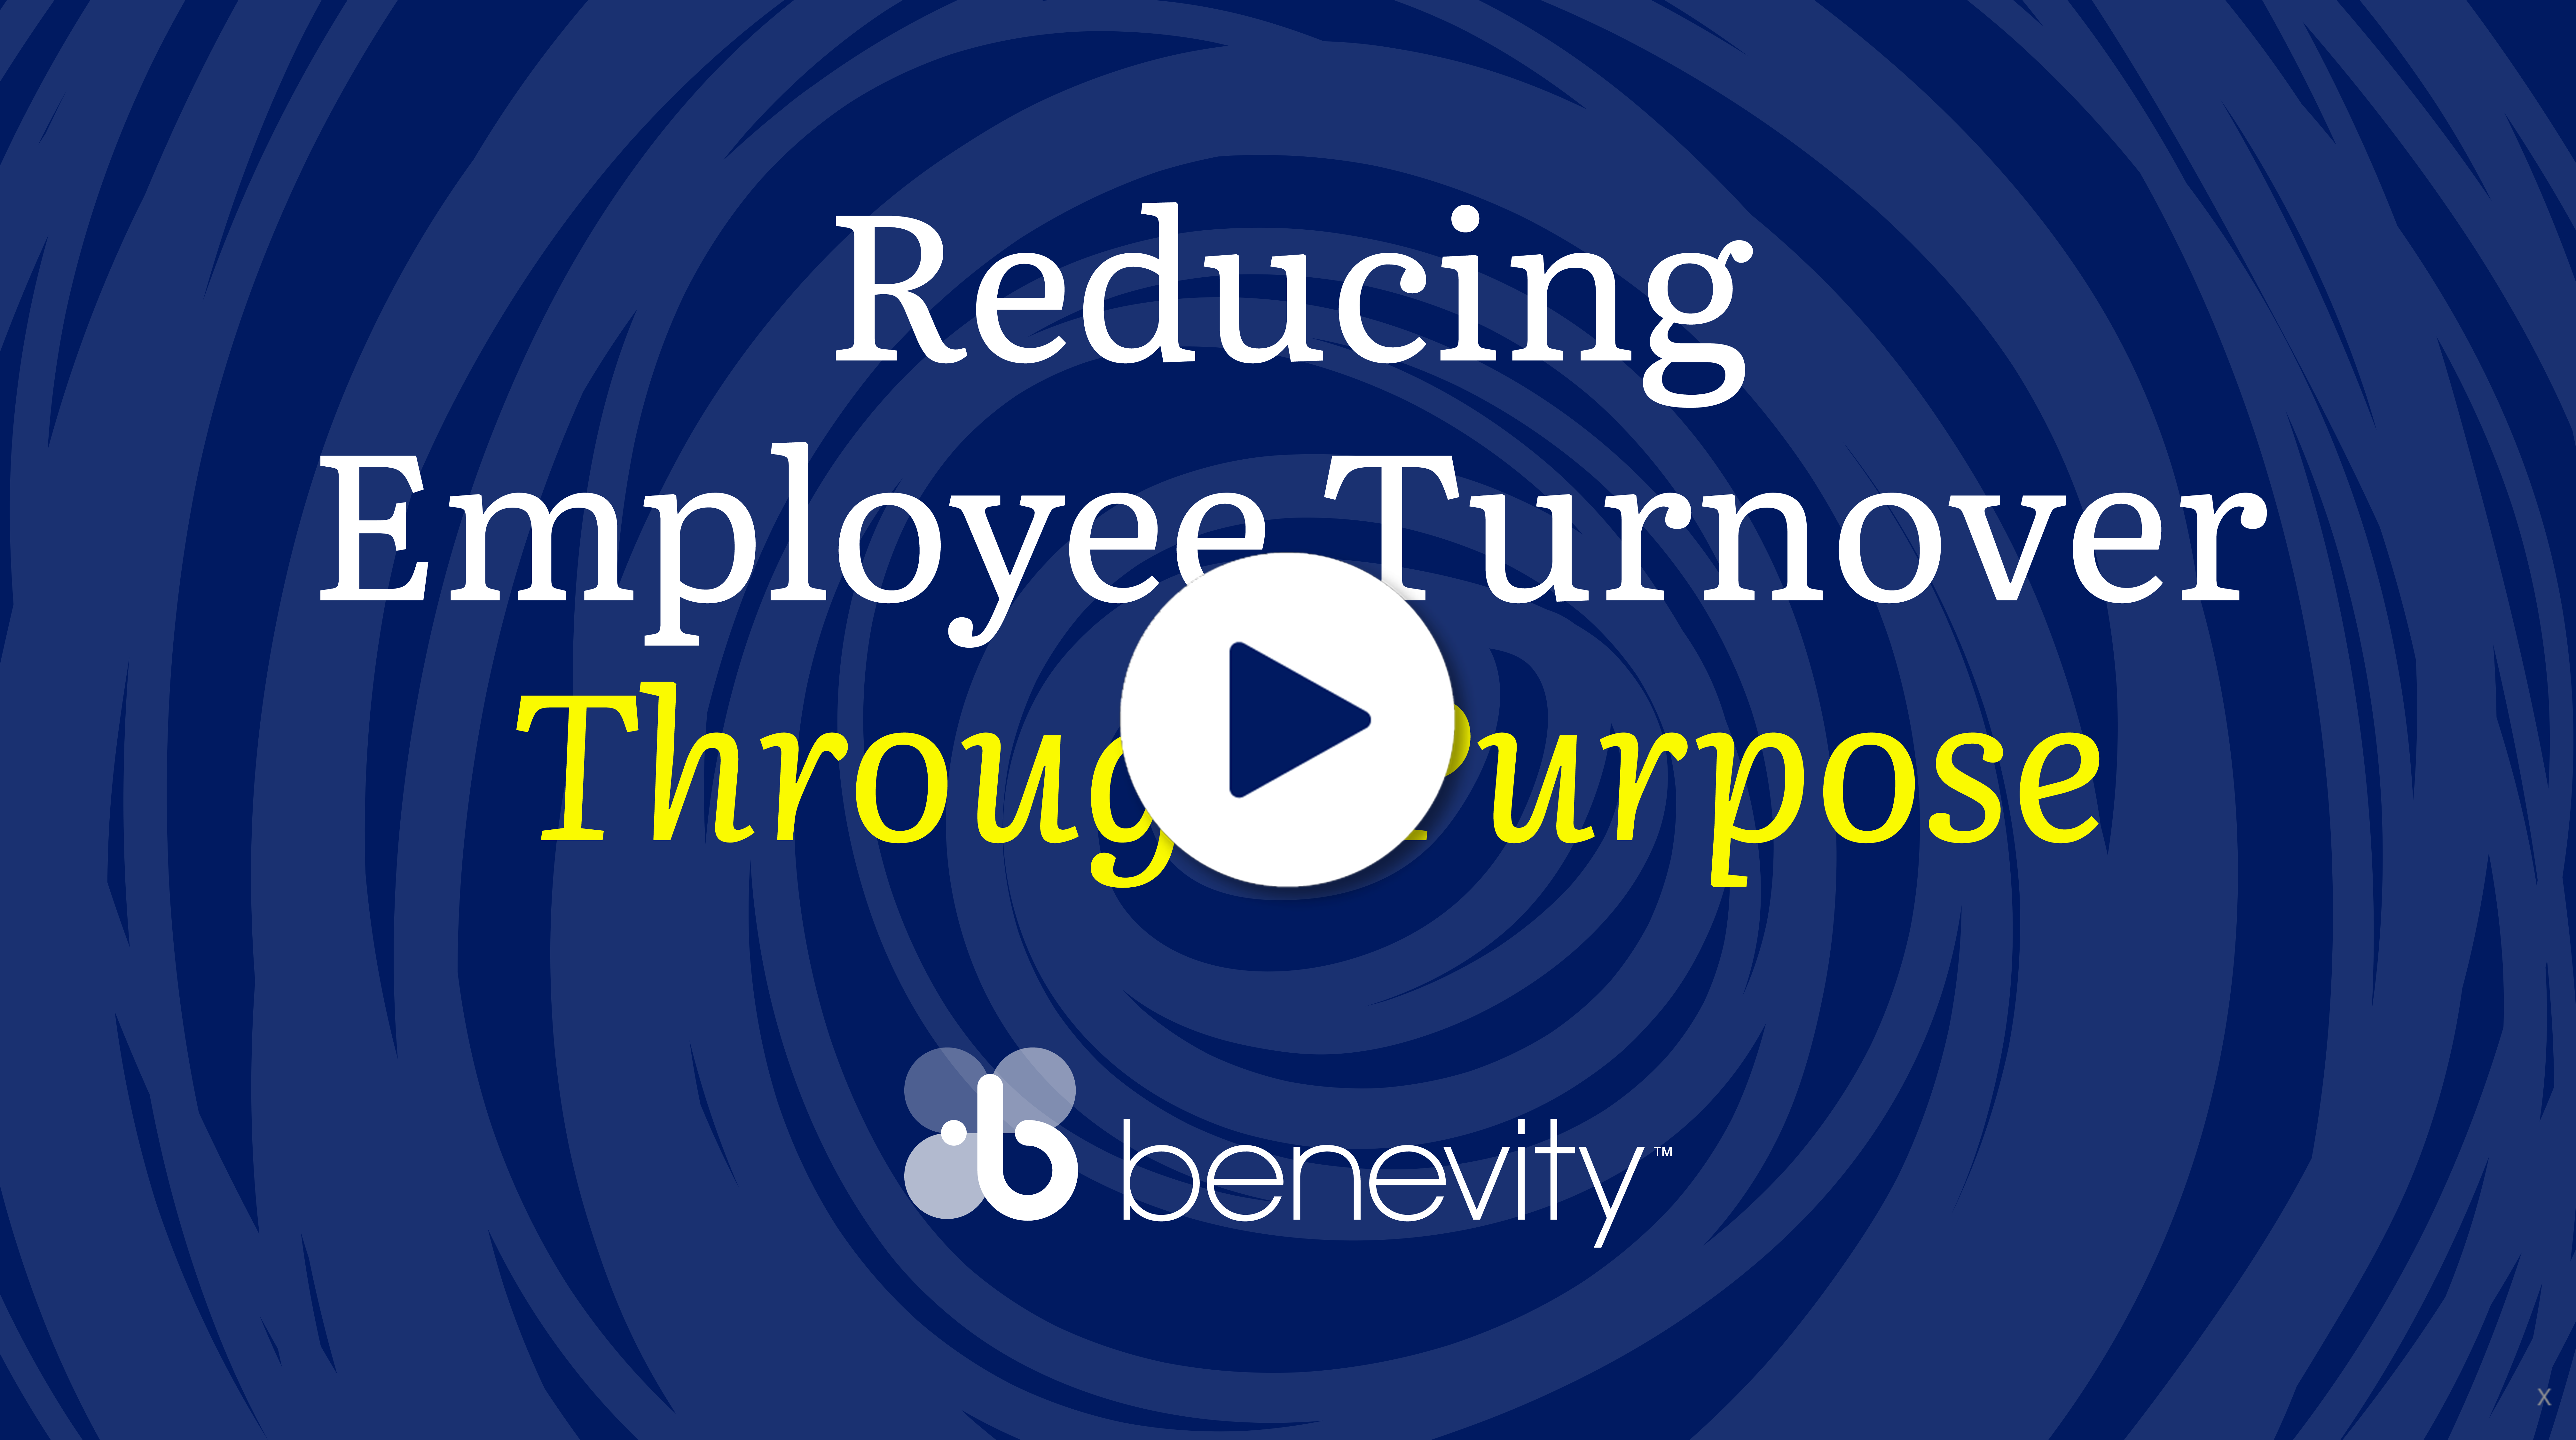 Reducing Employee Turnover Through Purpose